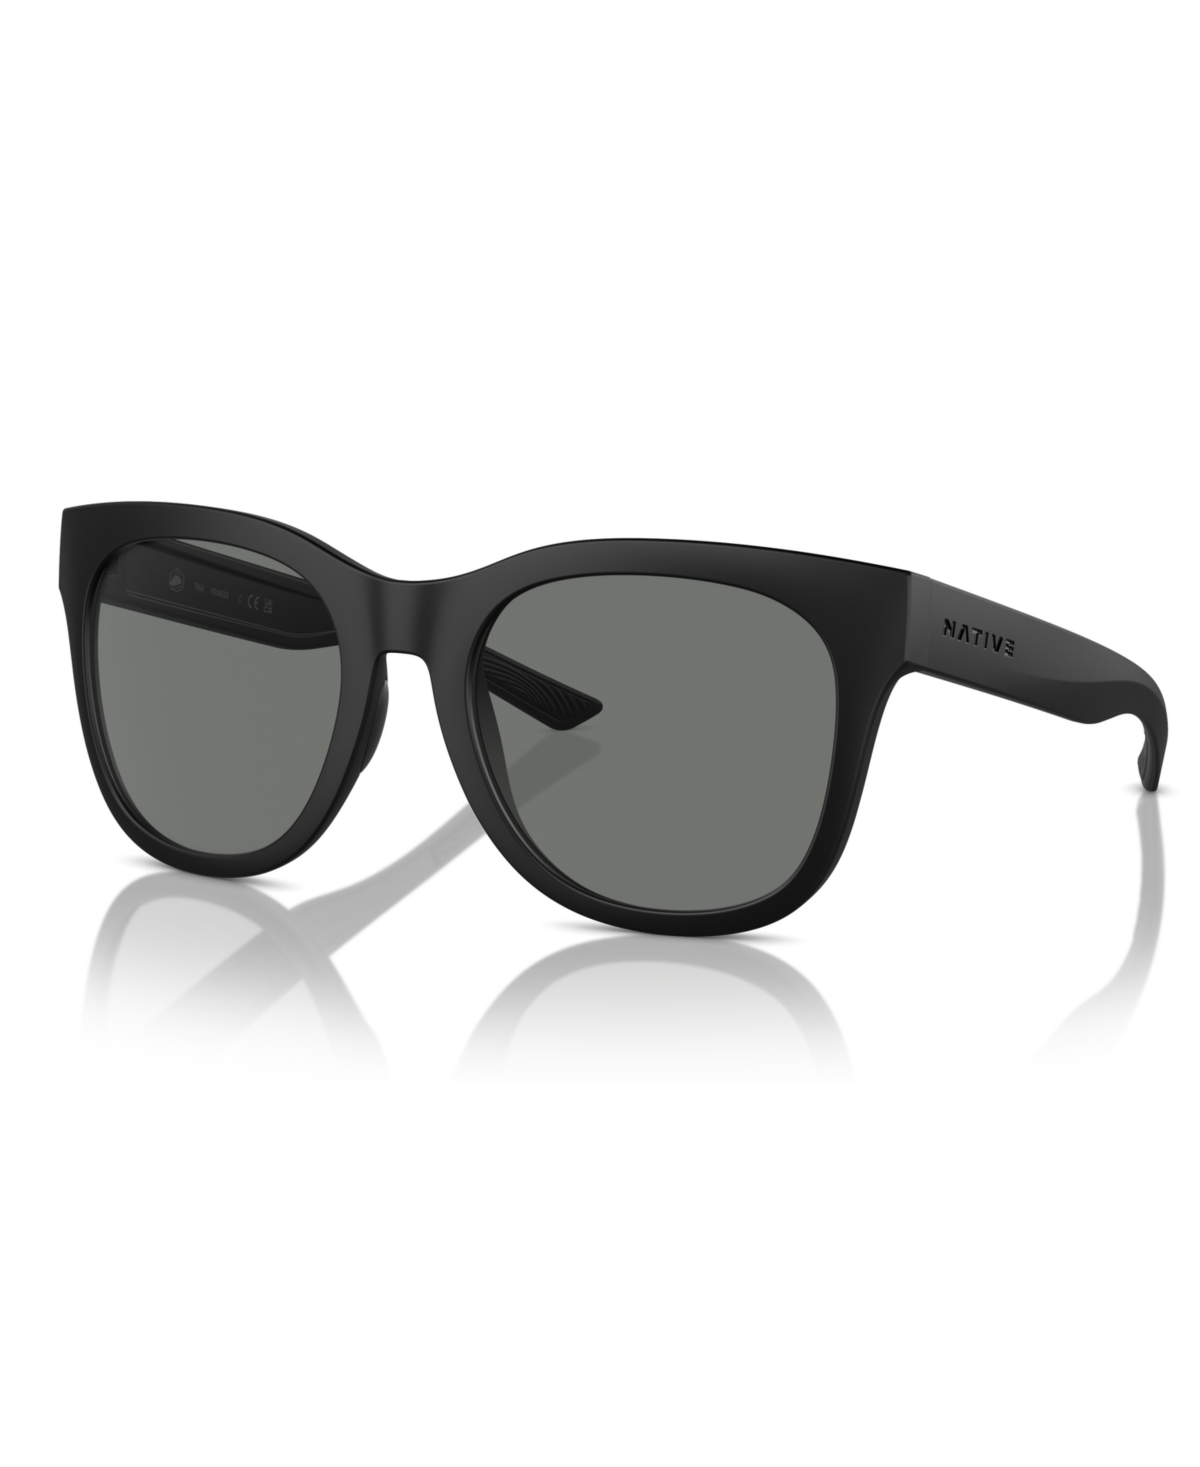 Native Eyewear Women's Polarized Sunglasses, Tiaga Xd9044 In Matte Black